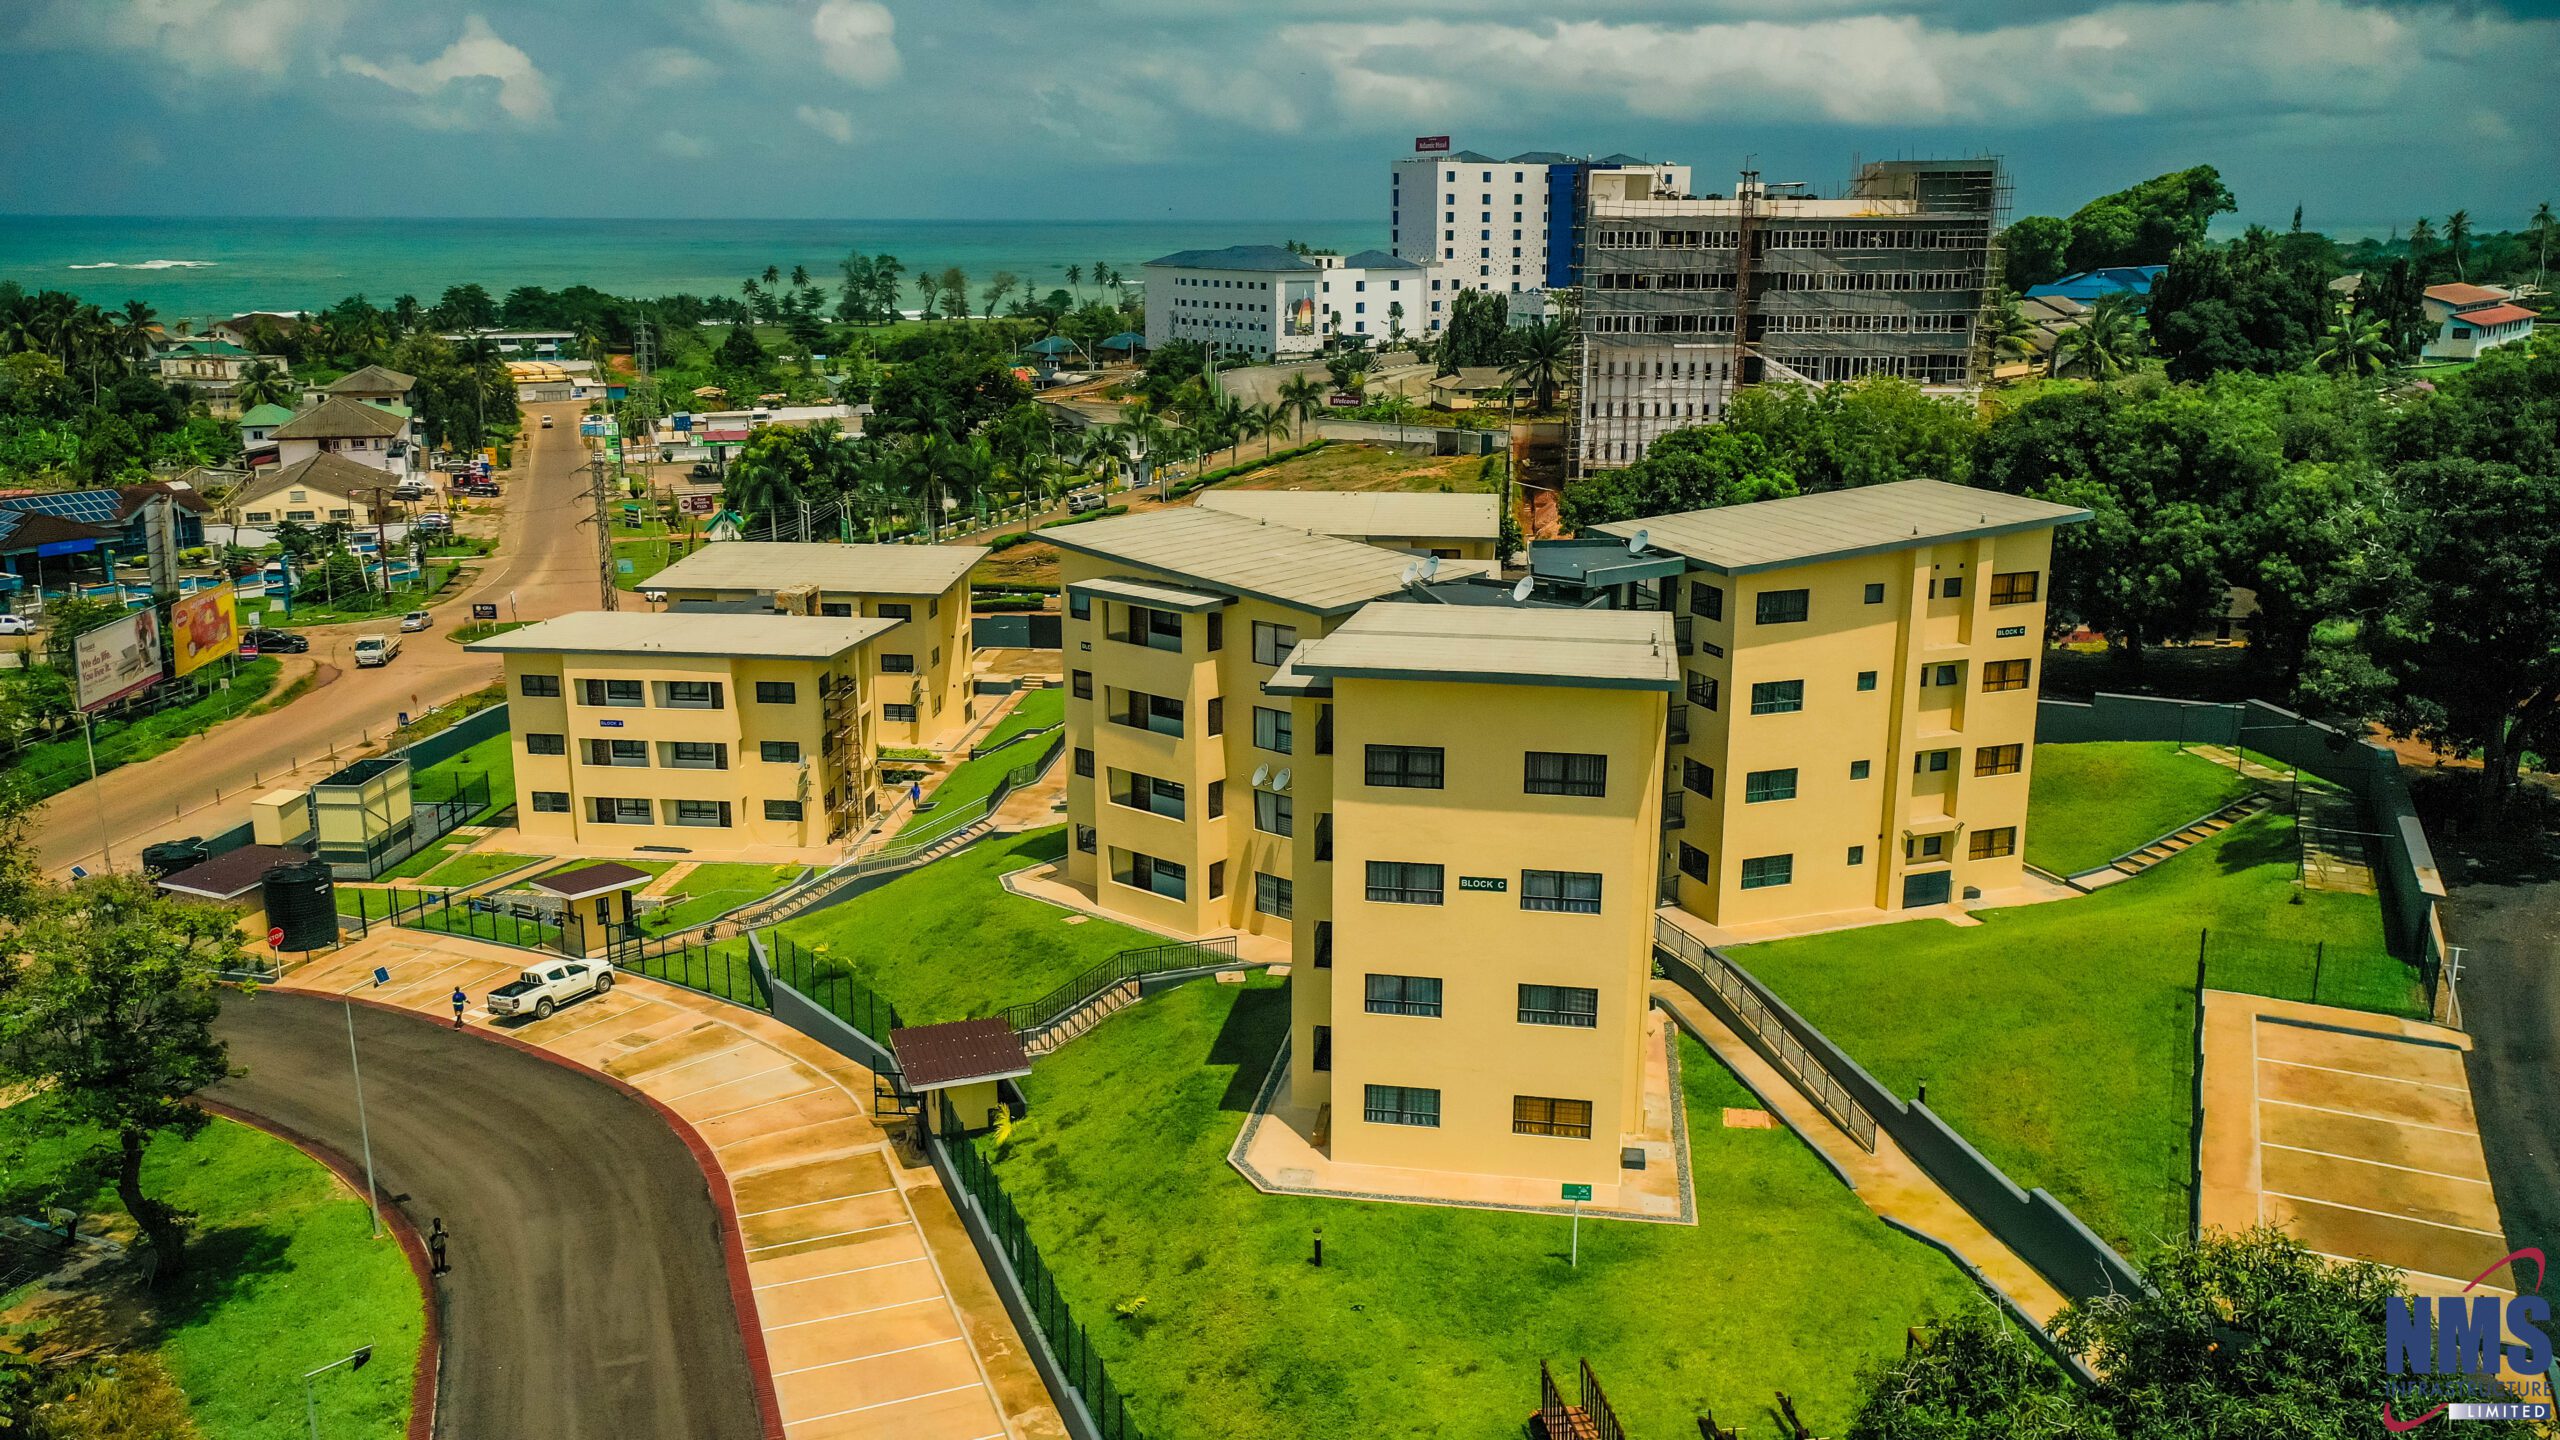 Official Handover of Takoradi European Hospital Project